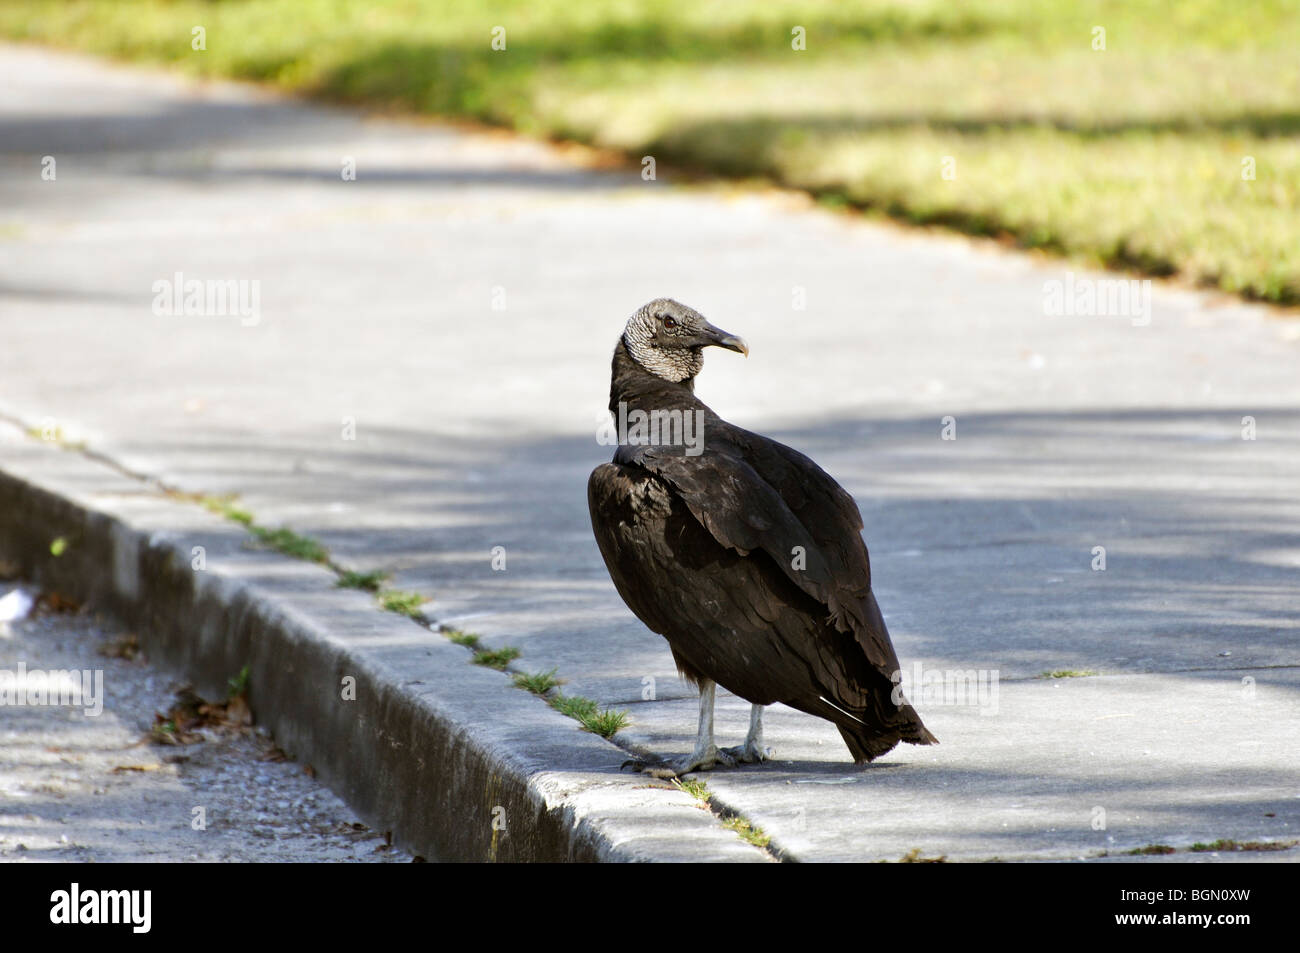 Black vulture at Everglades national park, Florida, USA Stock Photo